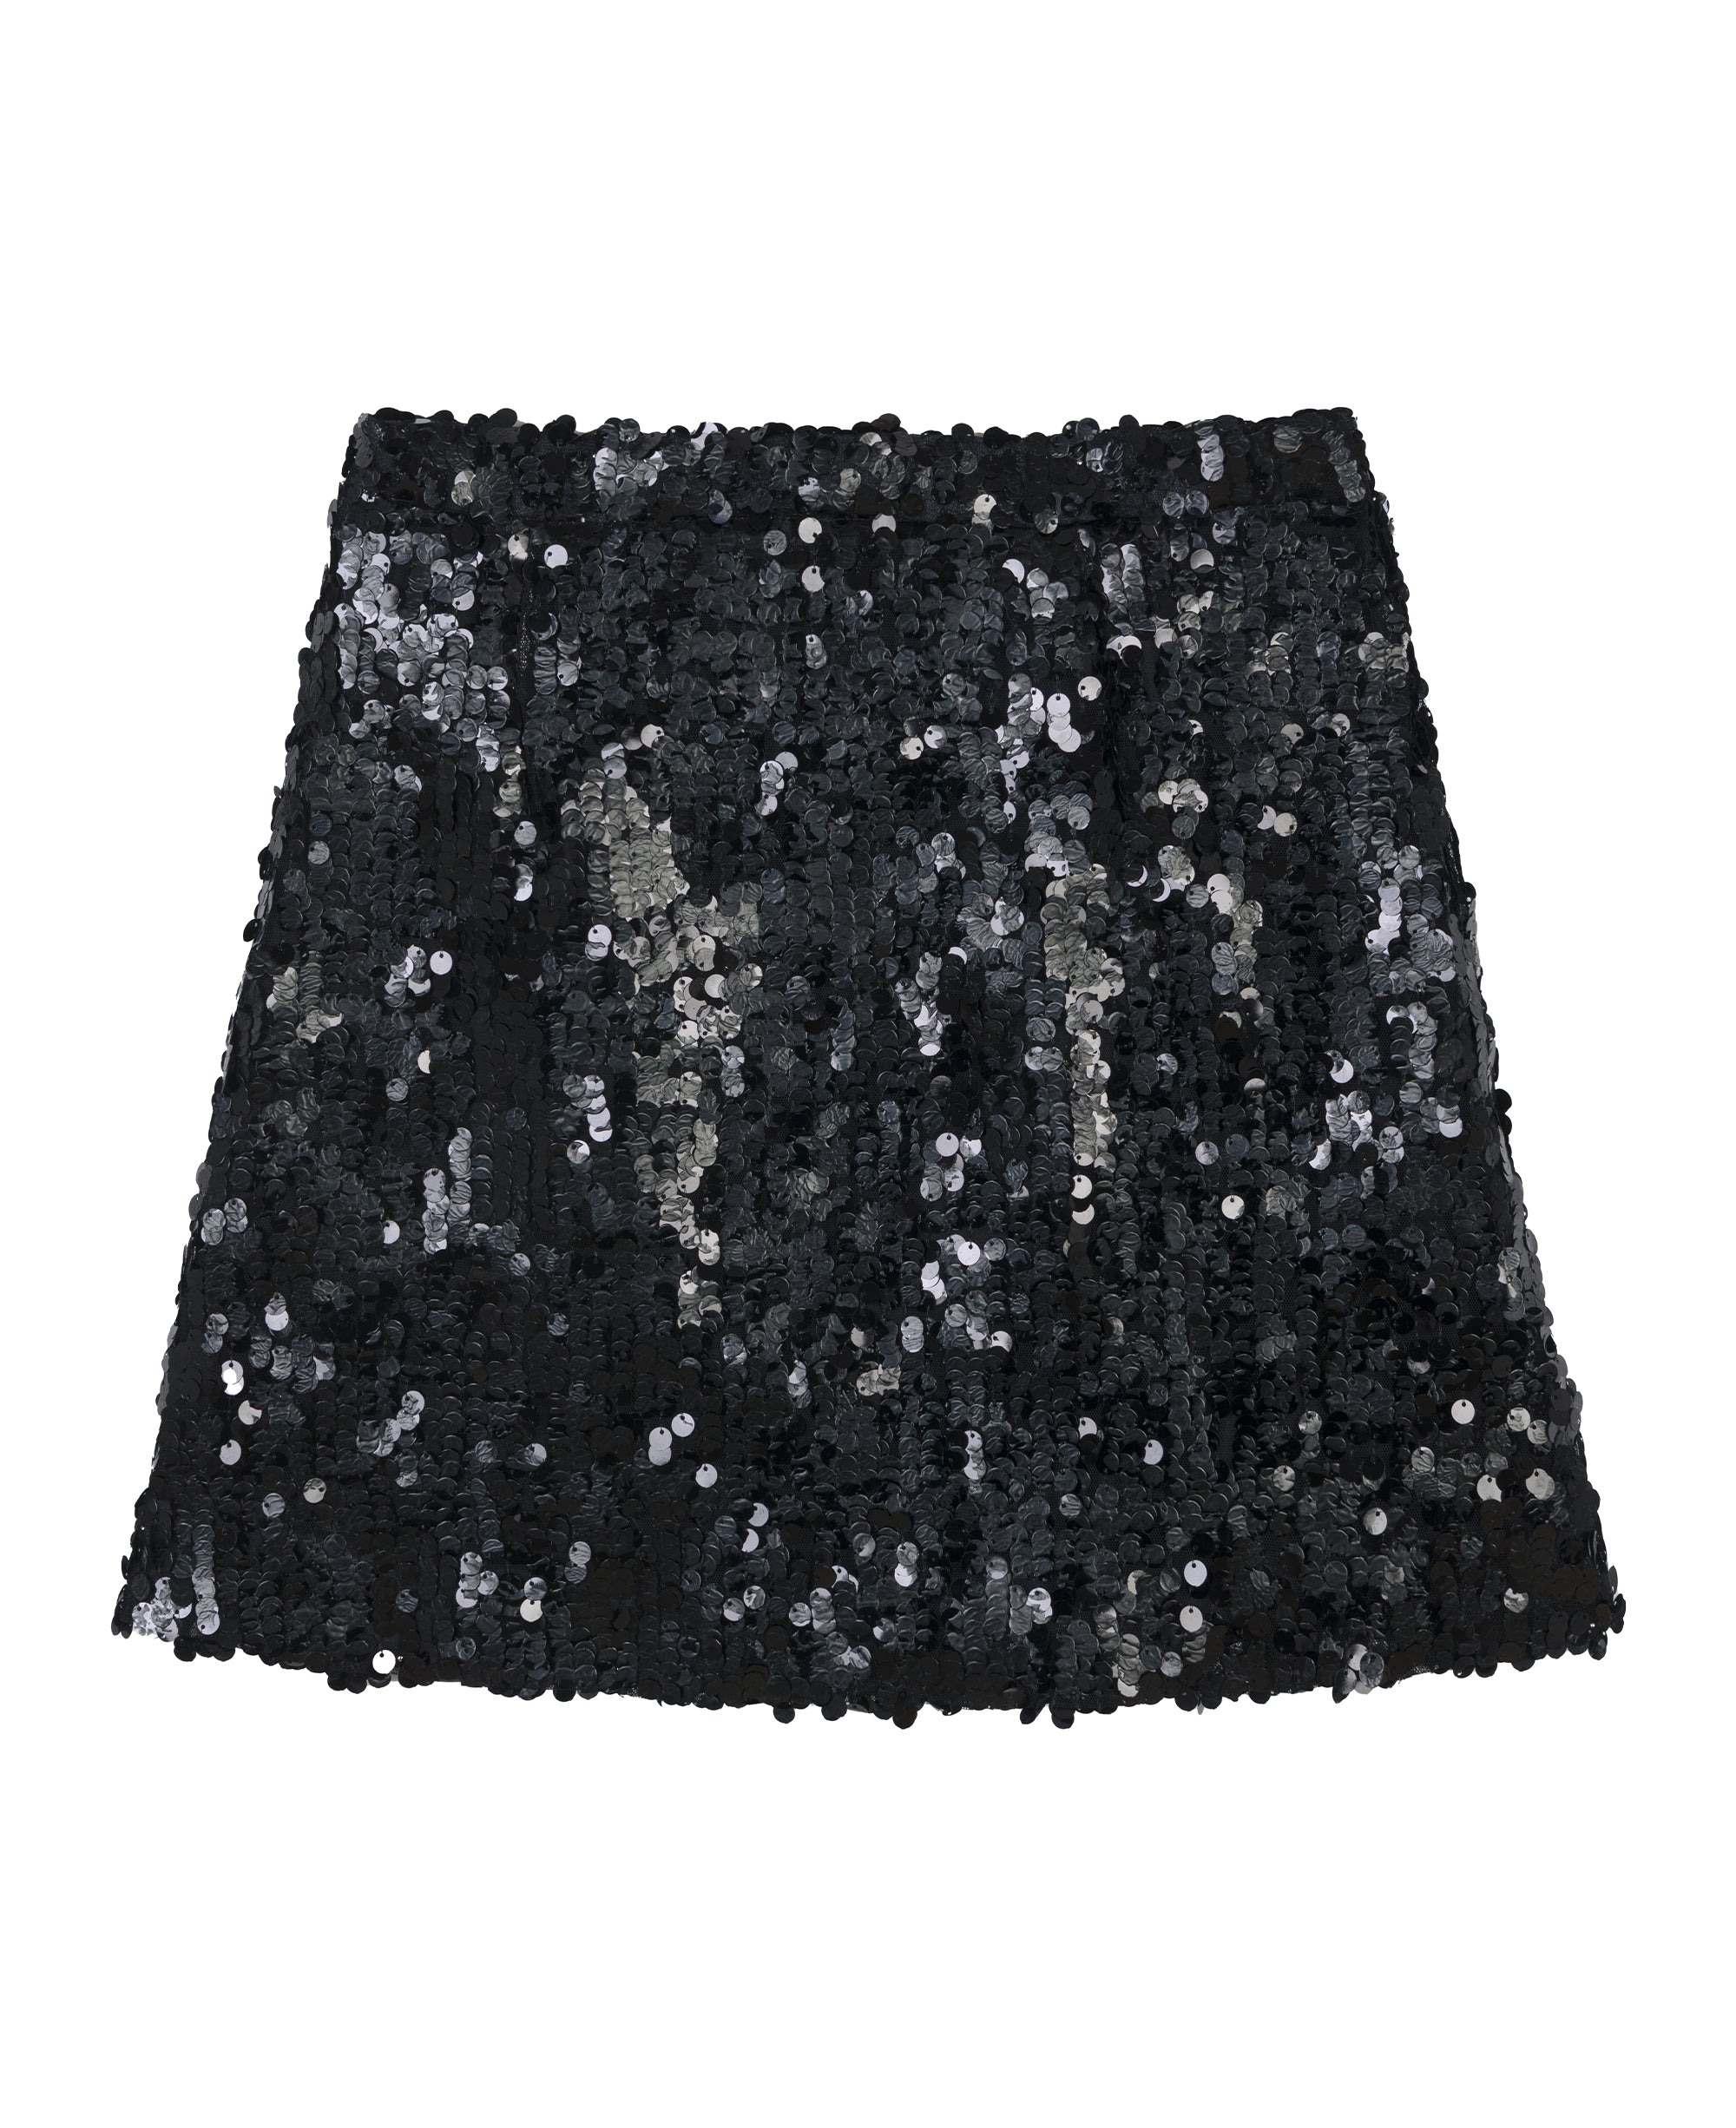 Good Morning Keith - Mary Black Sequin Mini Skirt